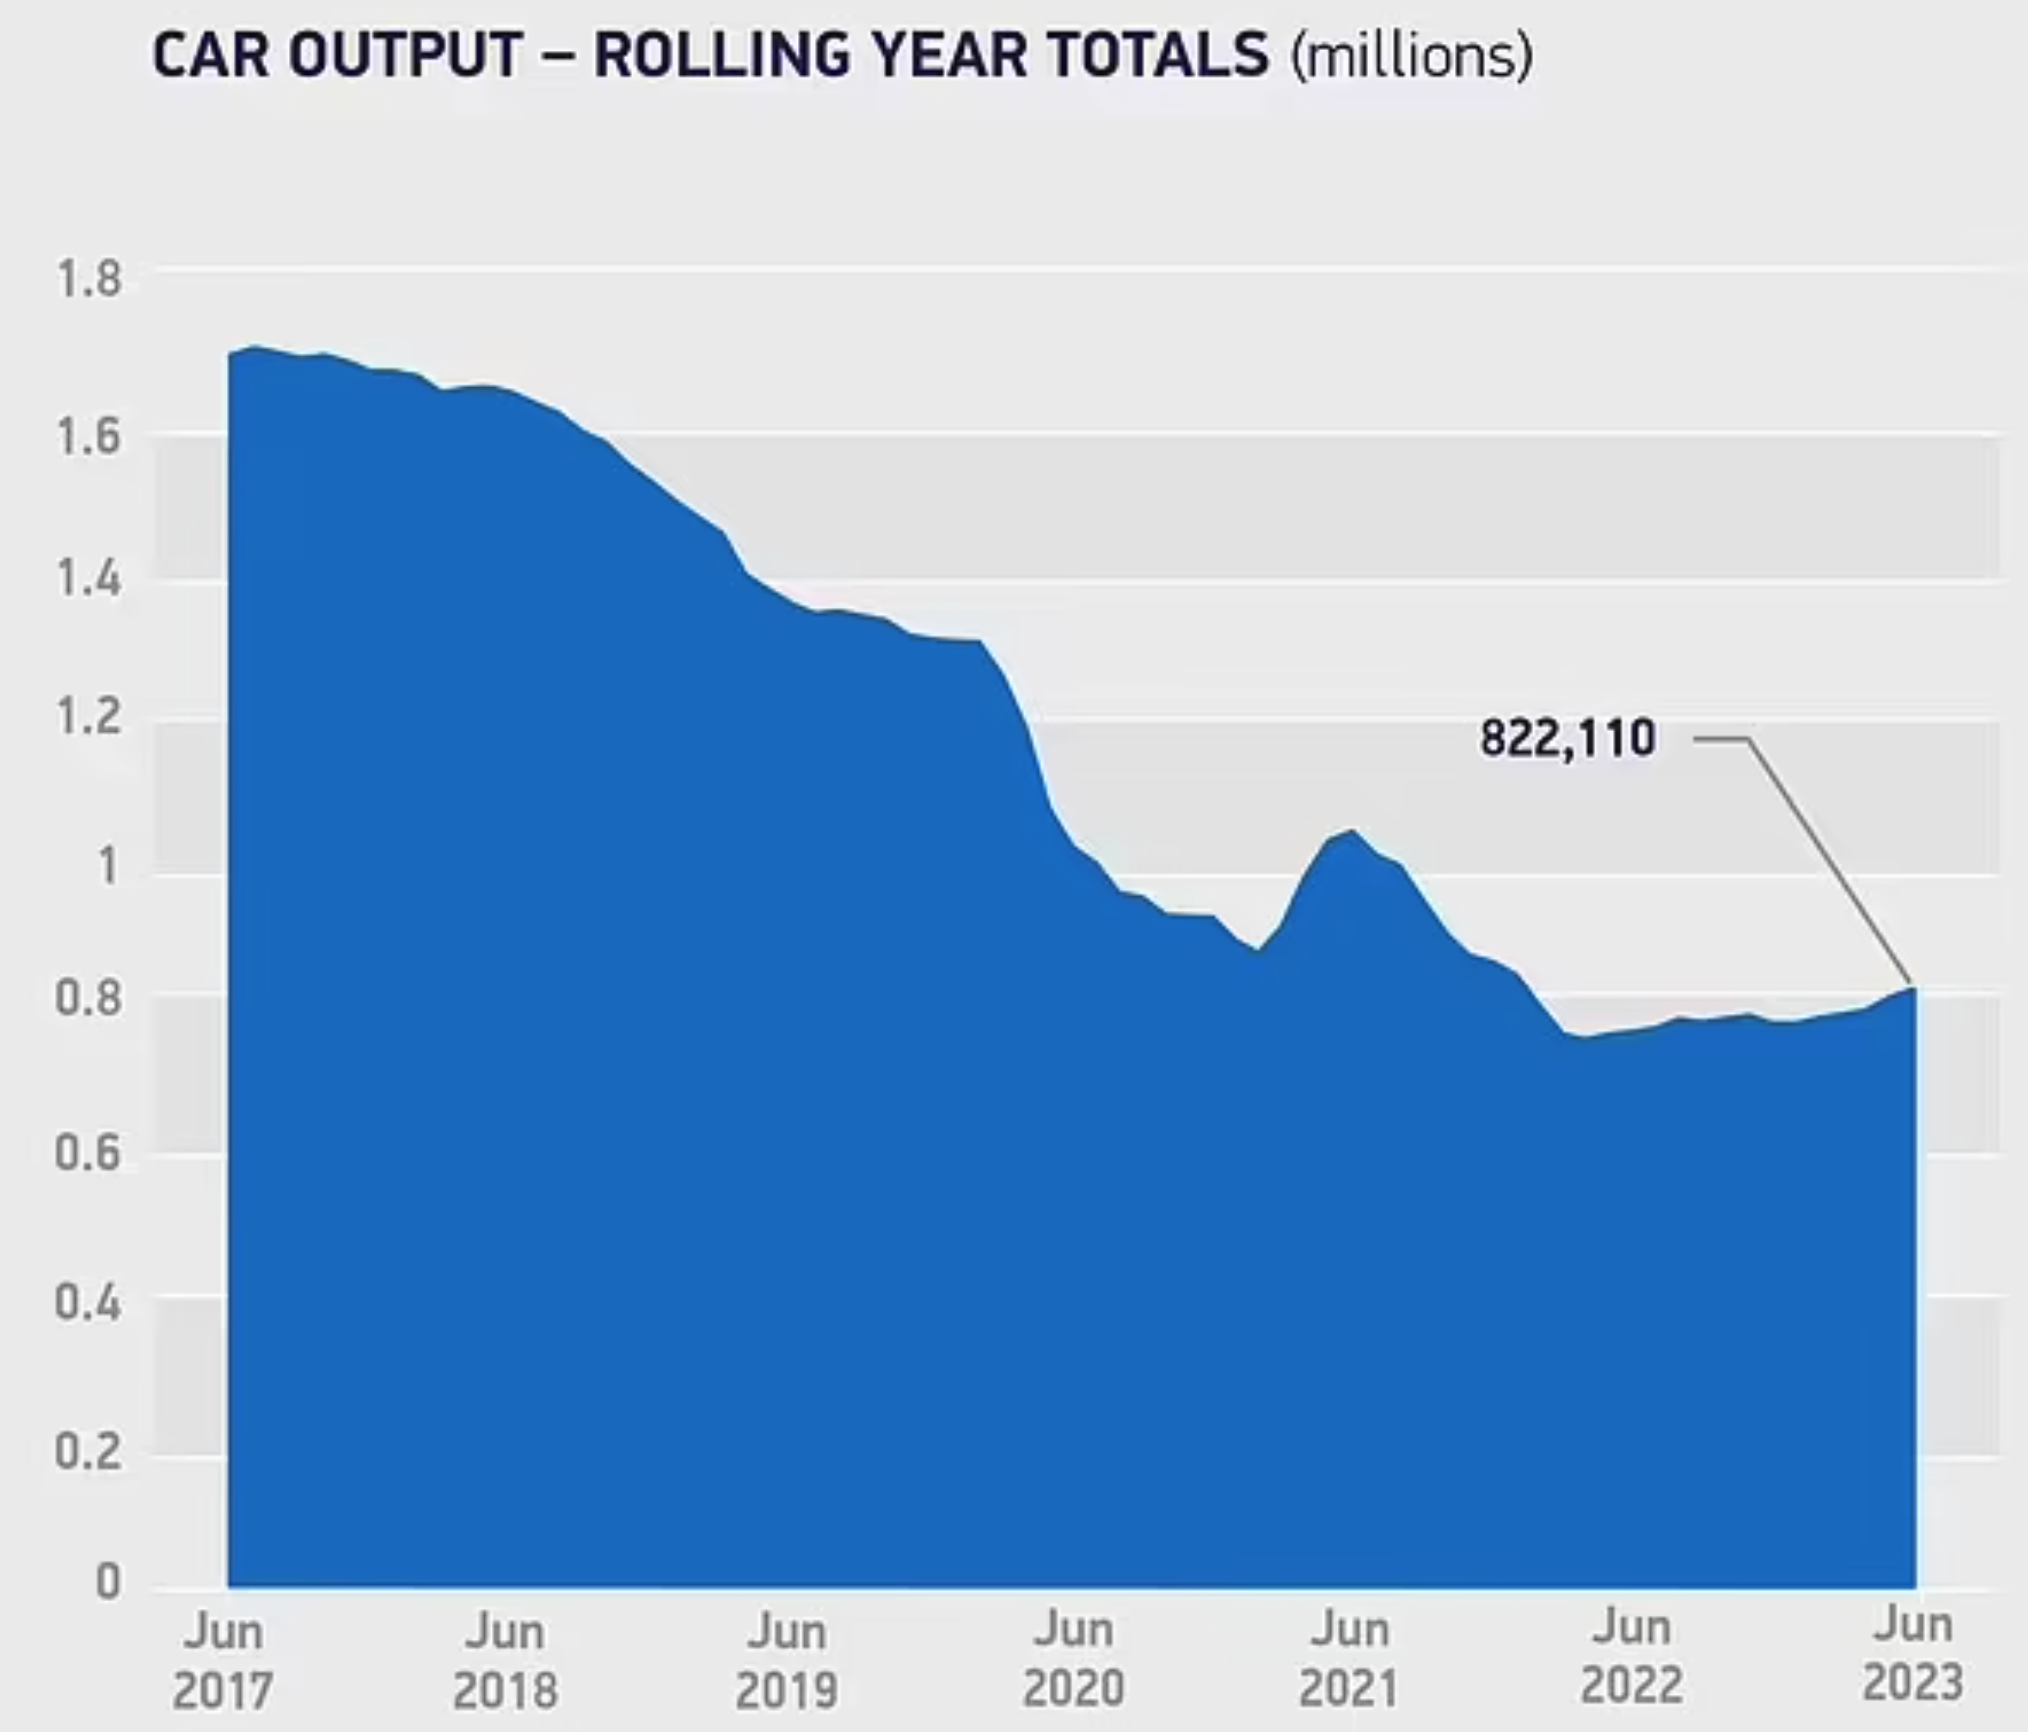 UK car outputs since June 2017